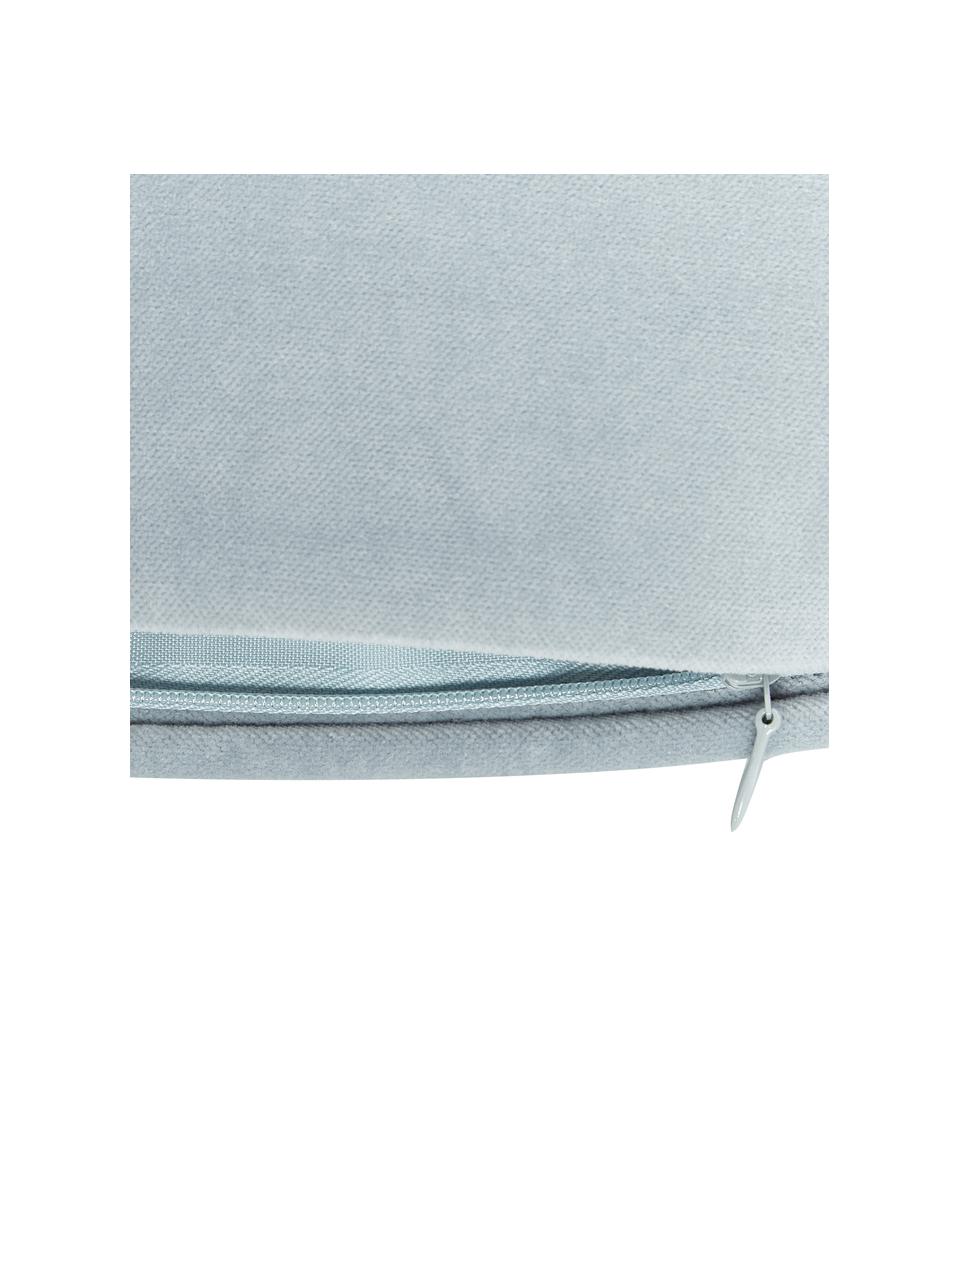 Einfarbige Samt-Kissenhülle Dana in Hellblau, 100% Baumwollsamt, Hellblau, 30 x 50 cm